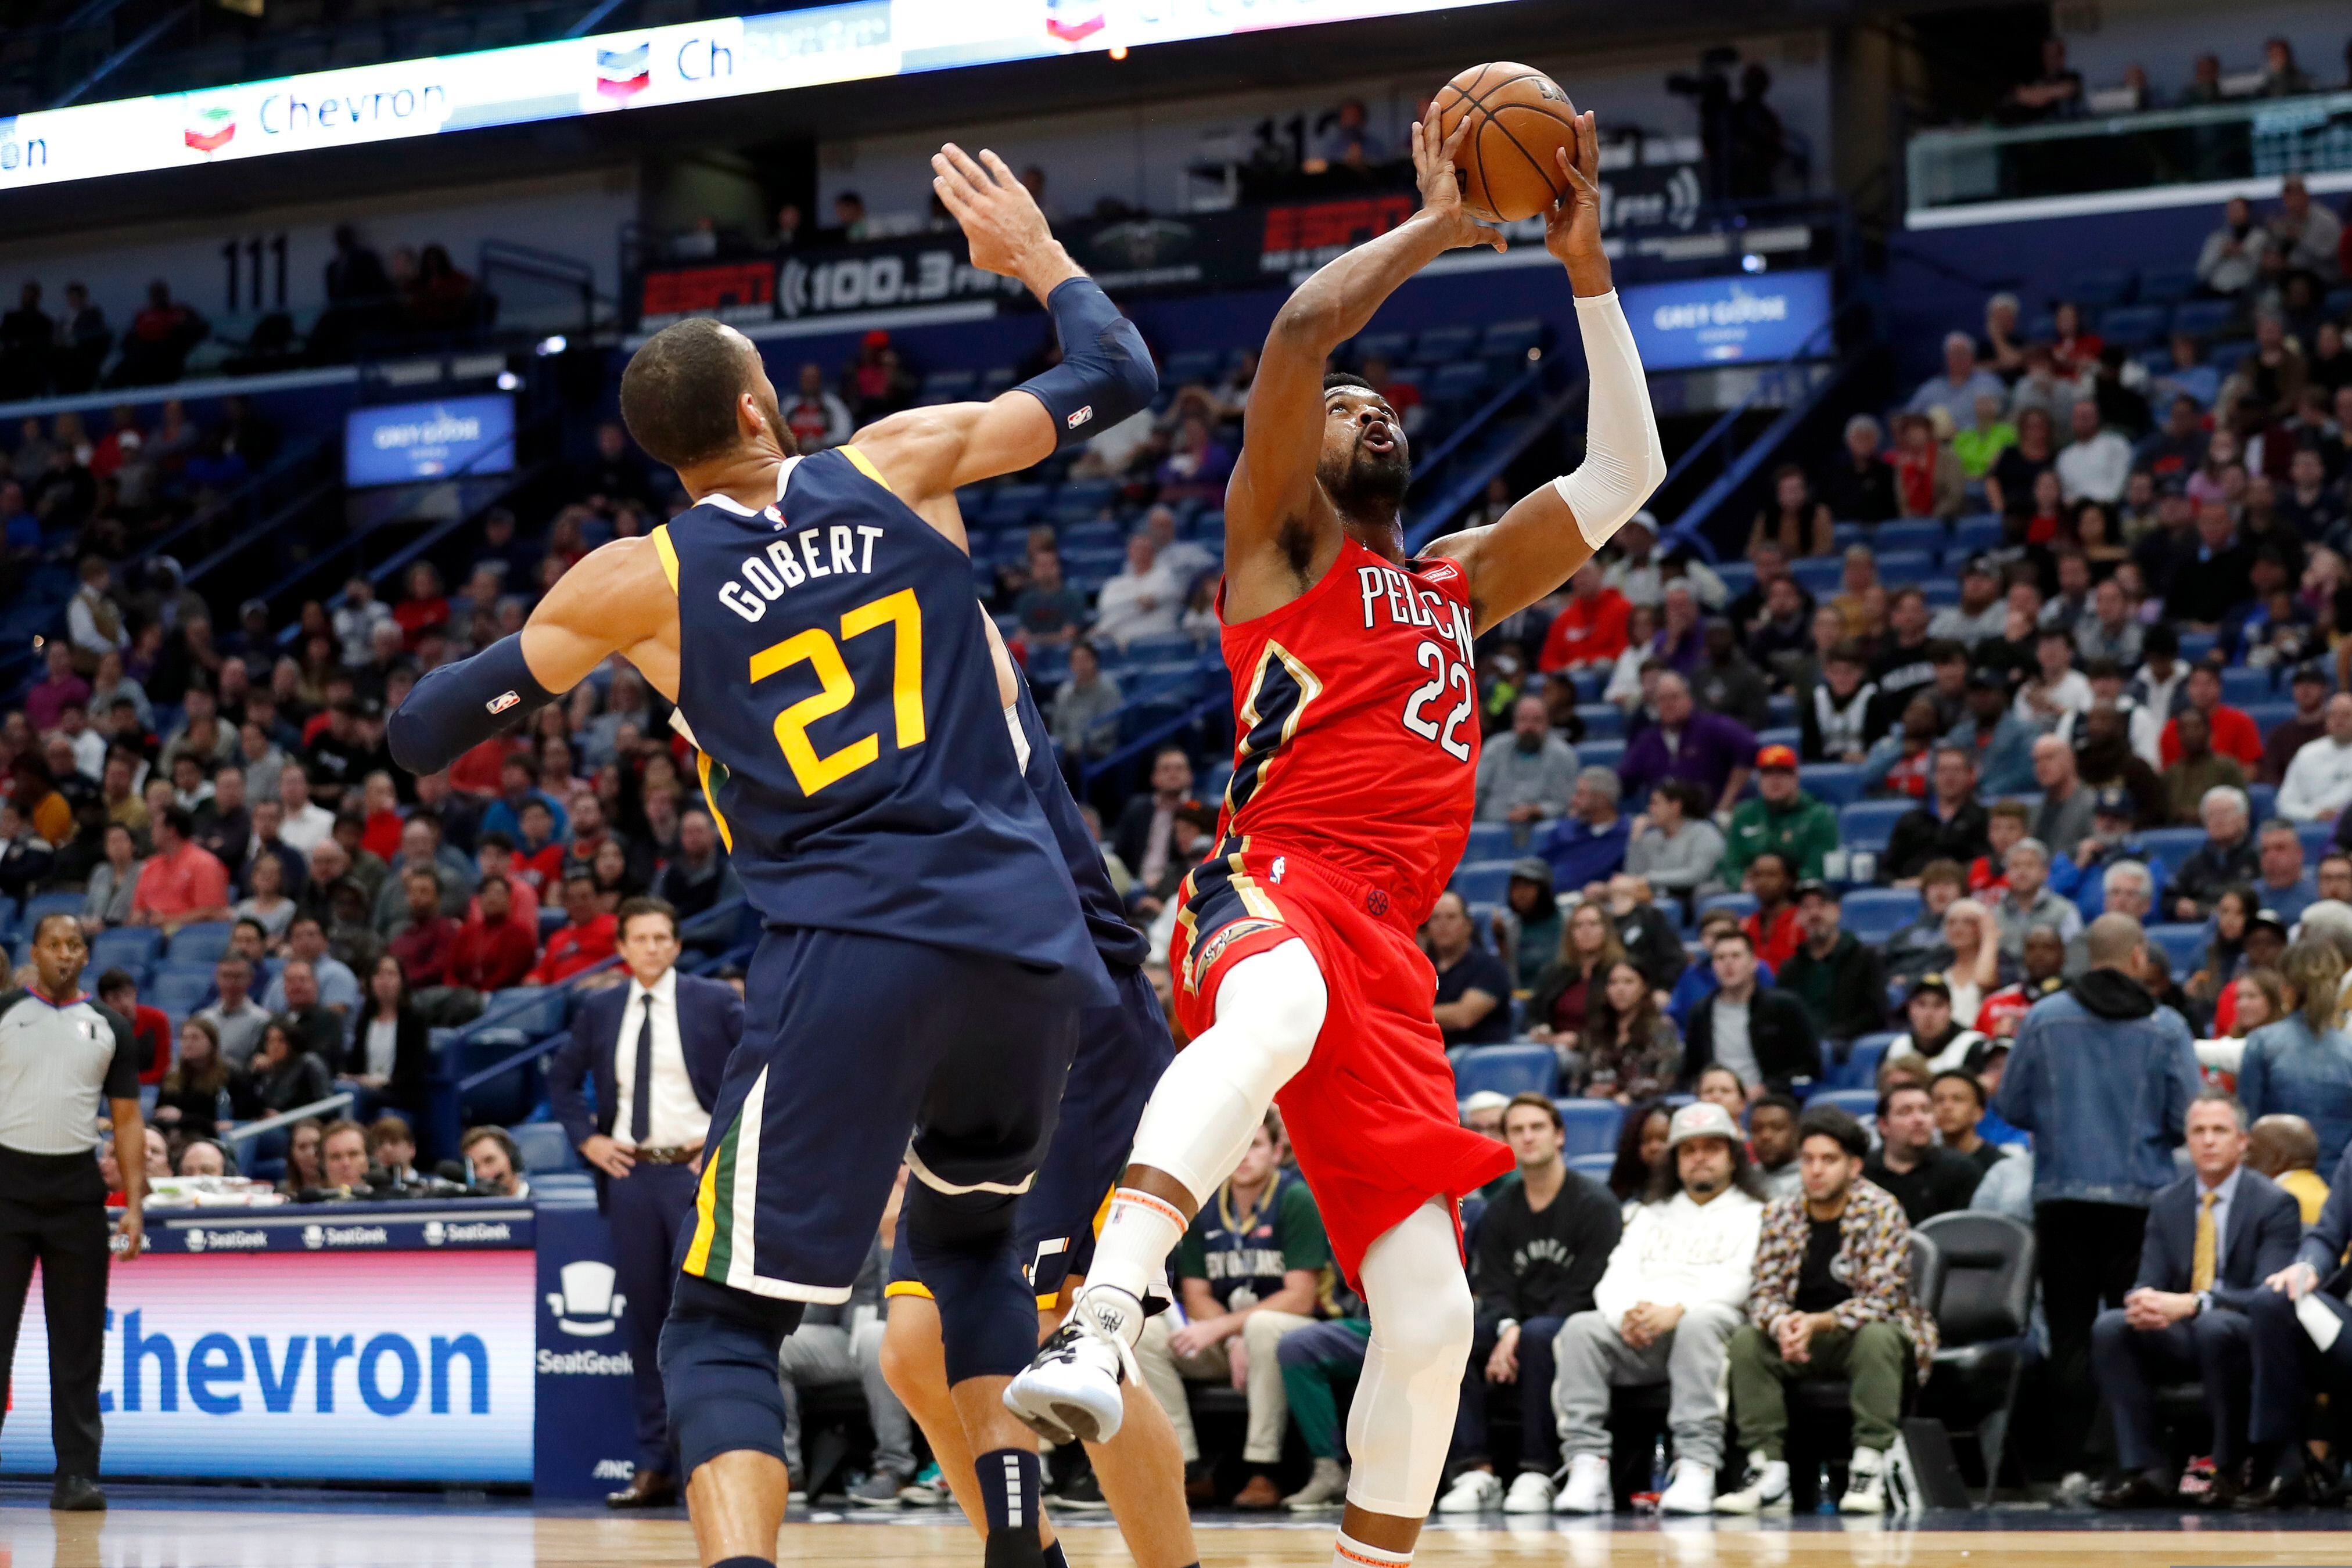 New Orleans Pelicans to Acquire Utah Jazz Forward Derrick Favors